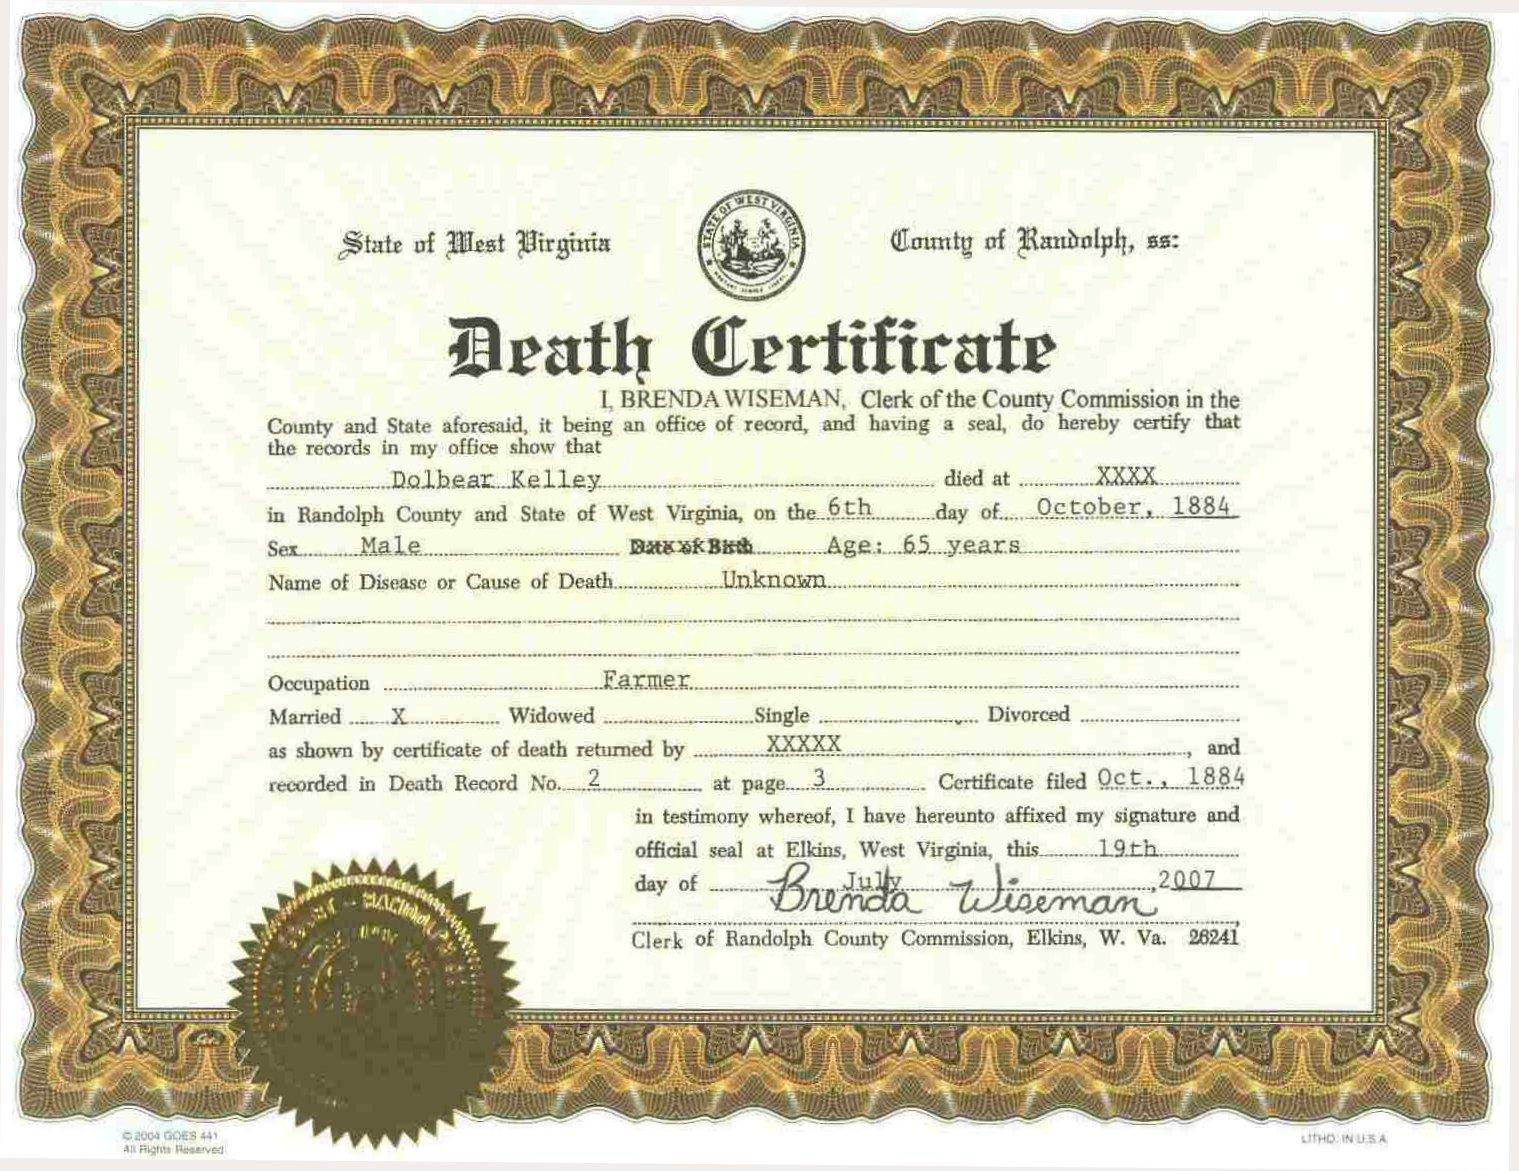 Certificate of Death Templates